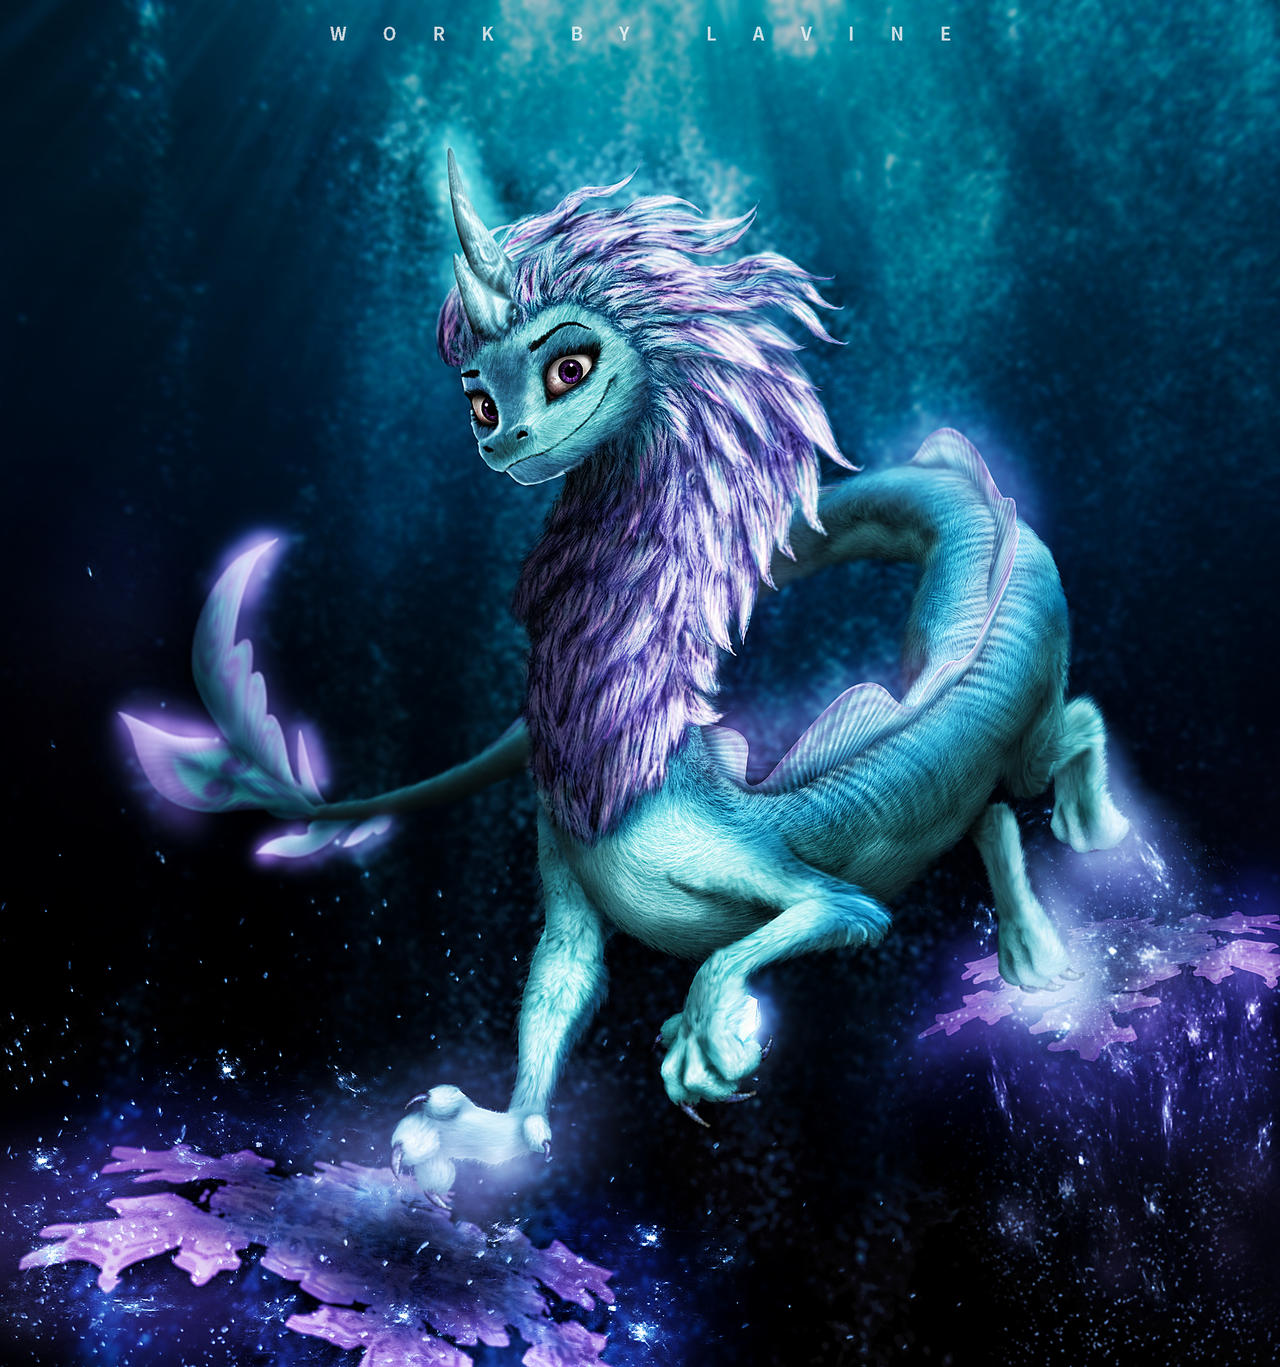 Sisu - raya and the last dragon by Disney by WorkbyLavine on DeviantArt